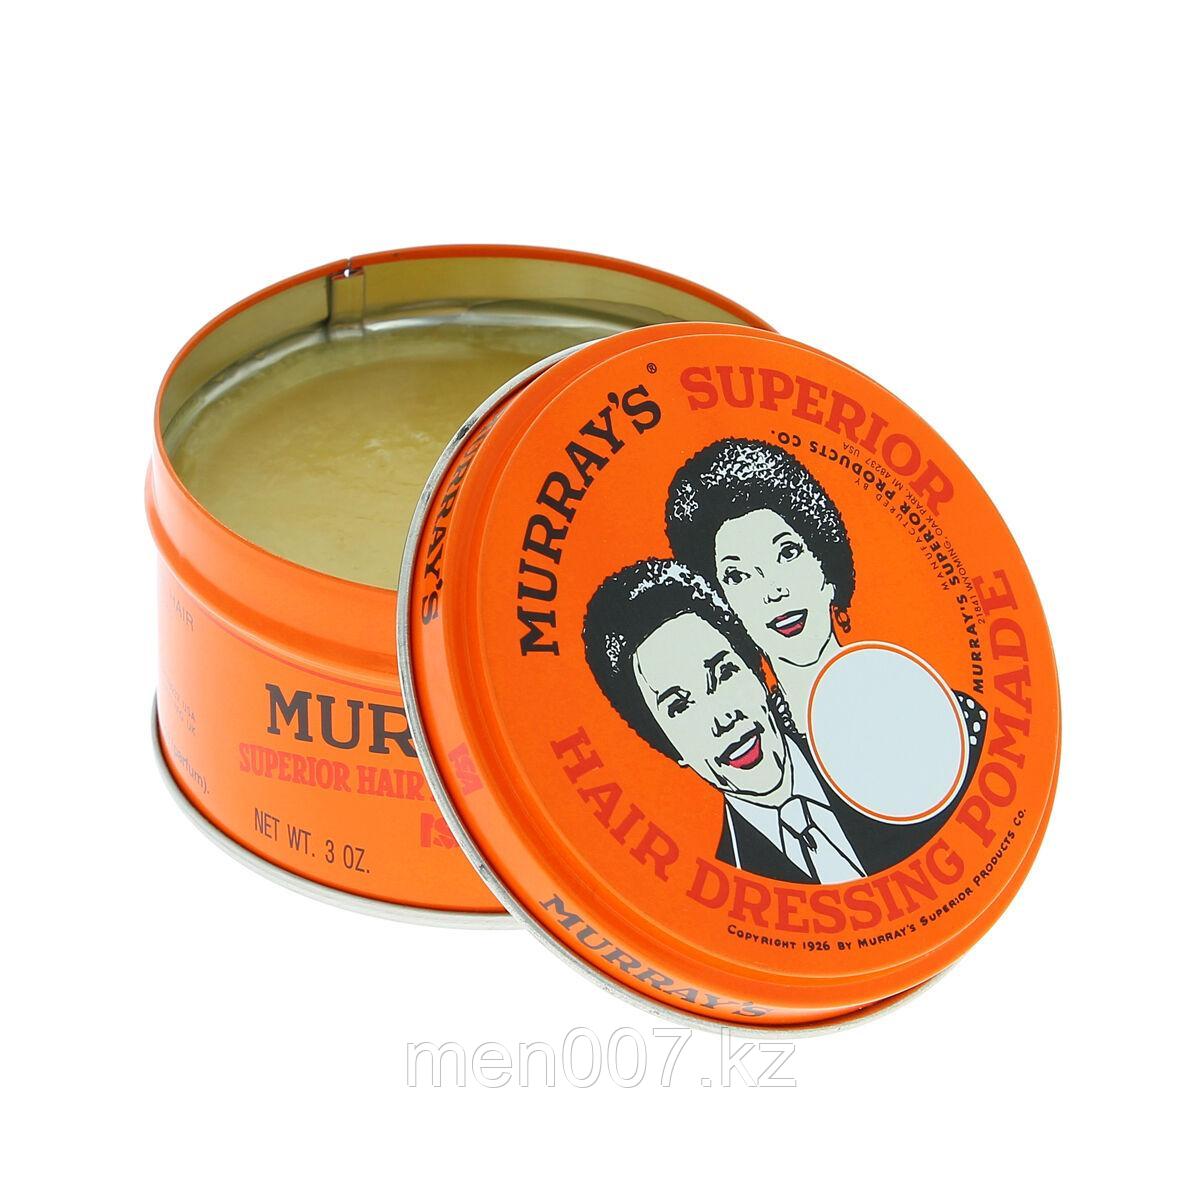 Murray's Original Pomade (помада для укладки волос) 84 грамма